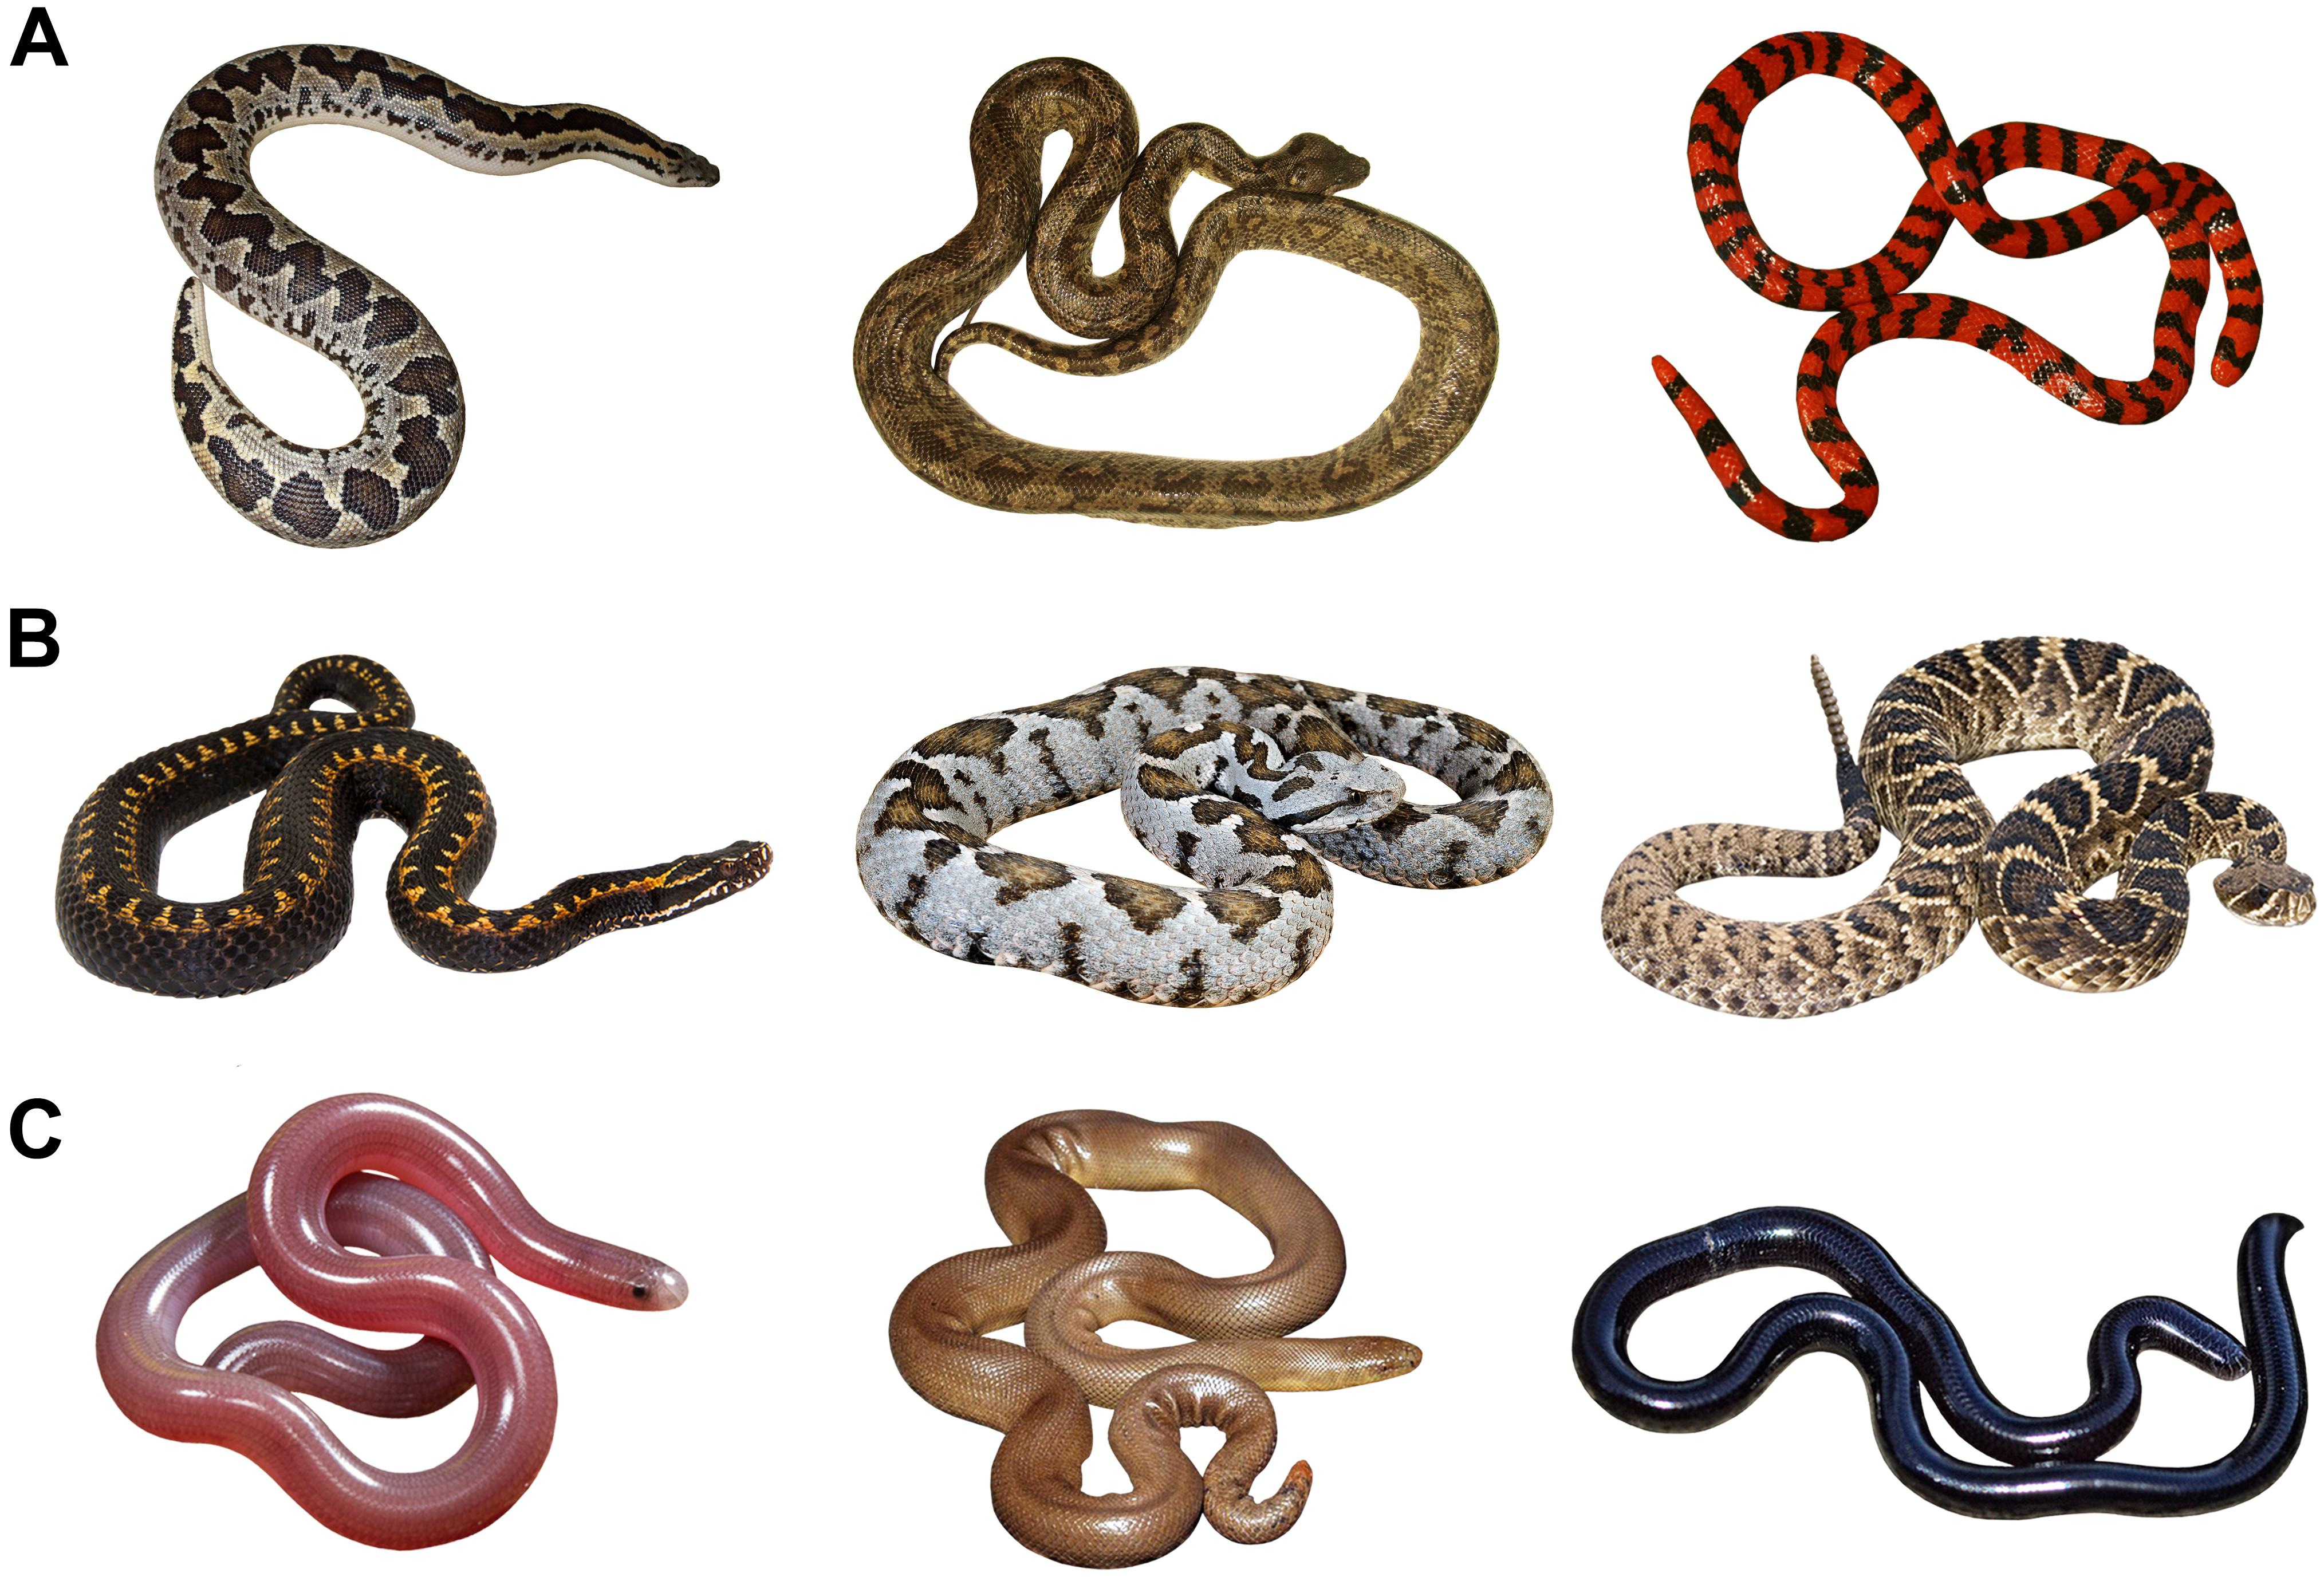 Snake files: Do we really need snakes?